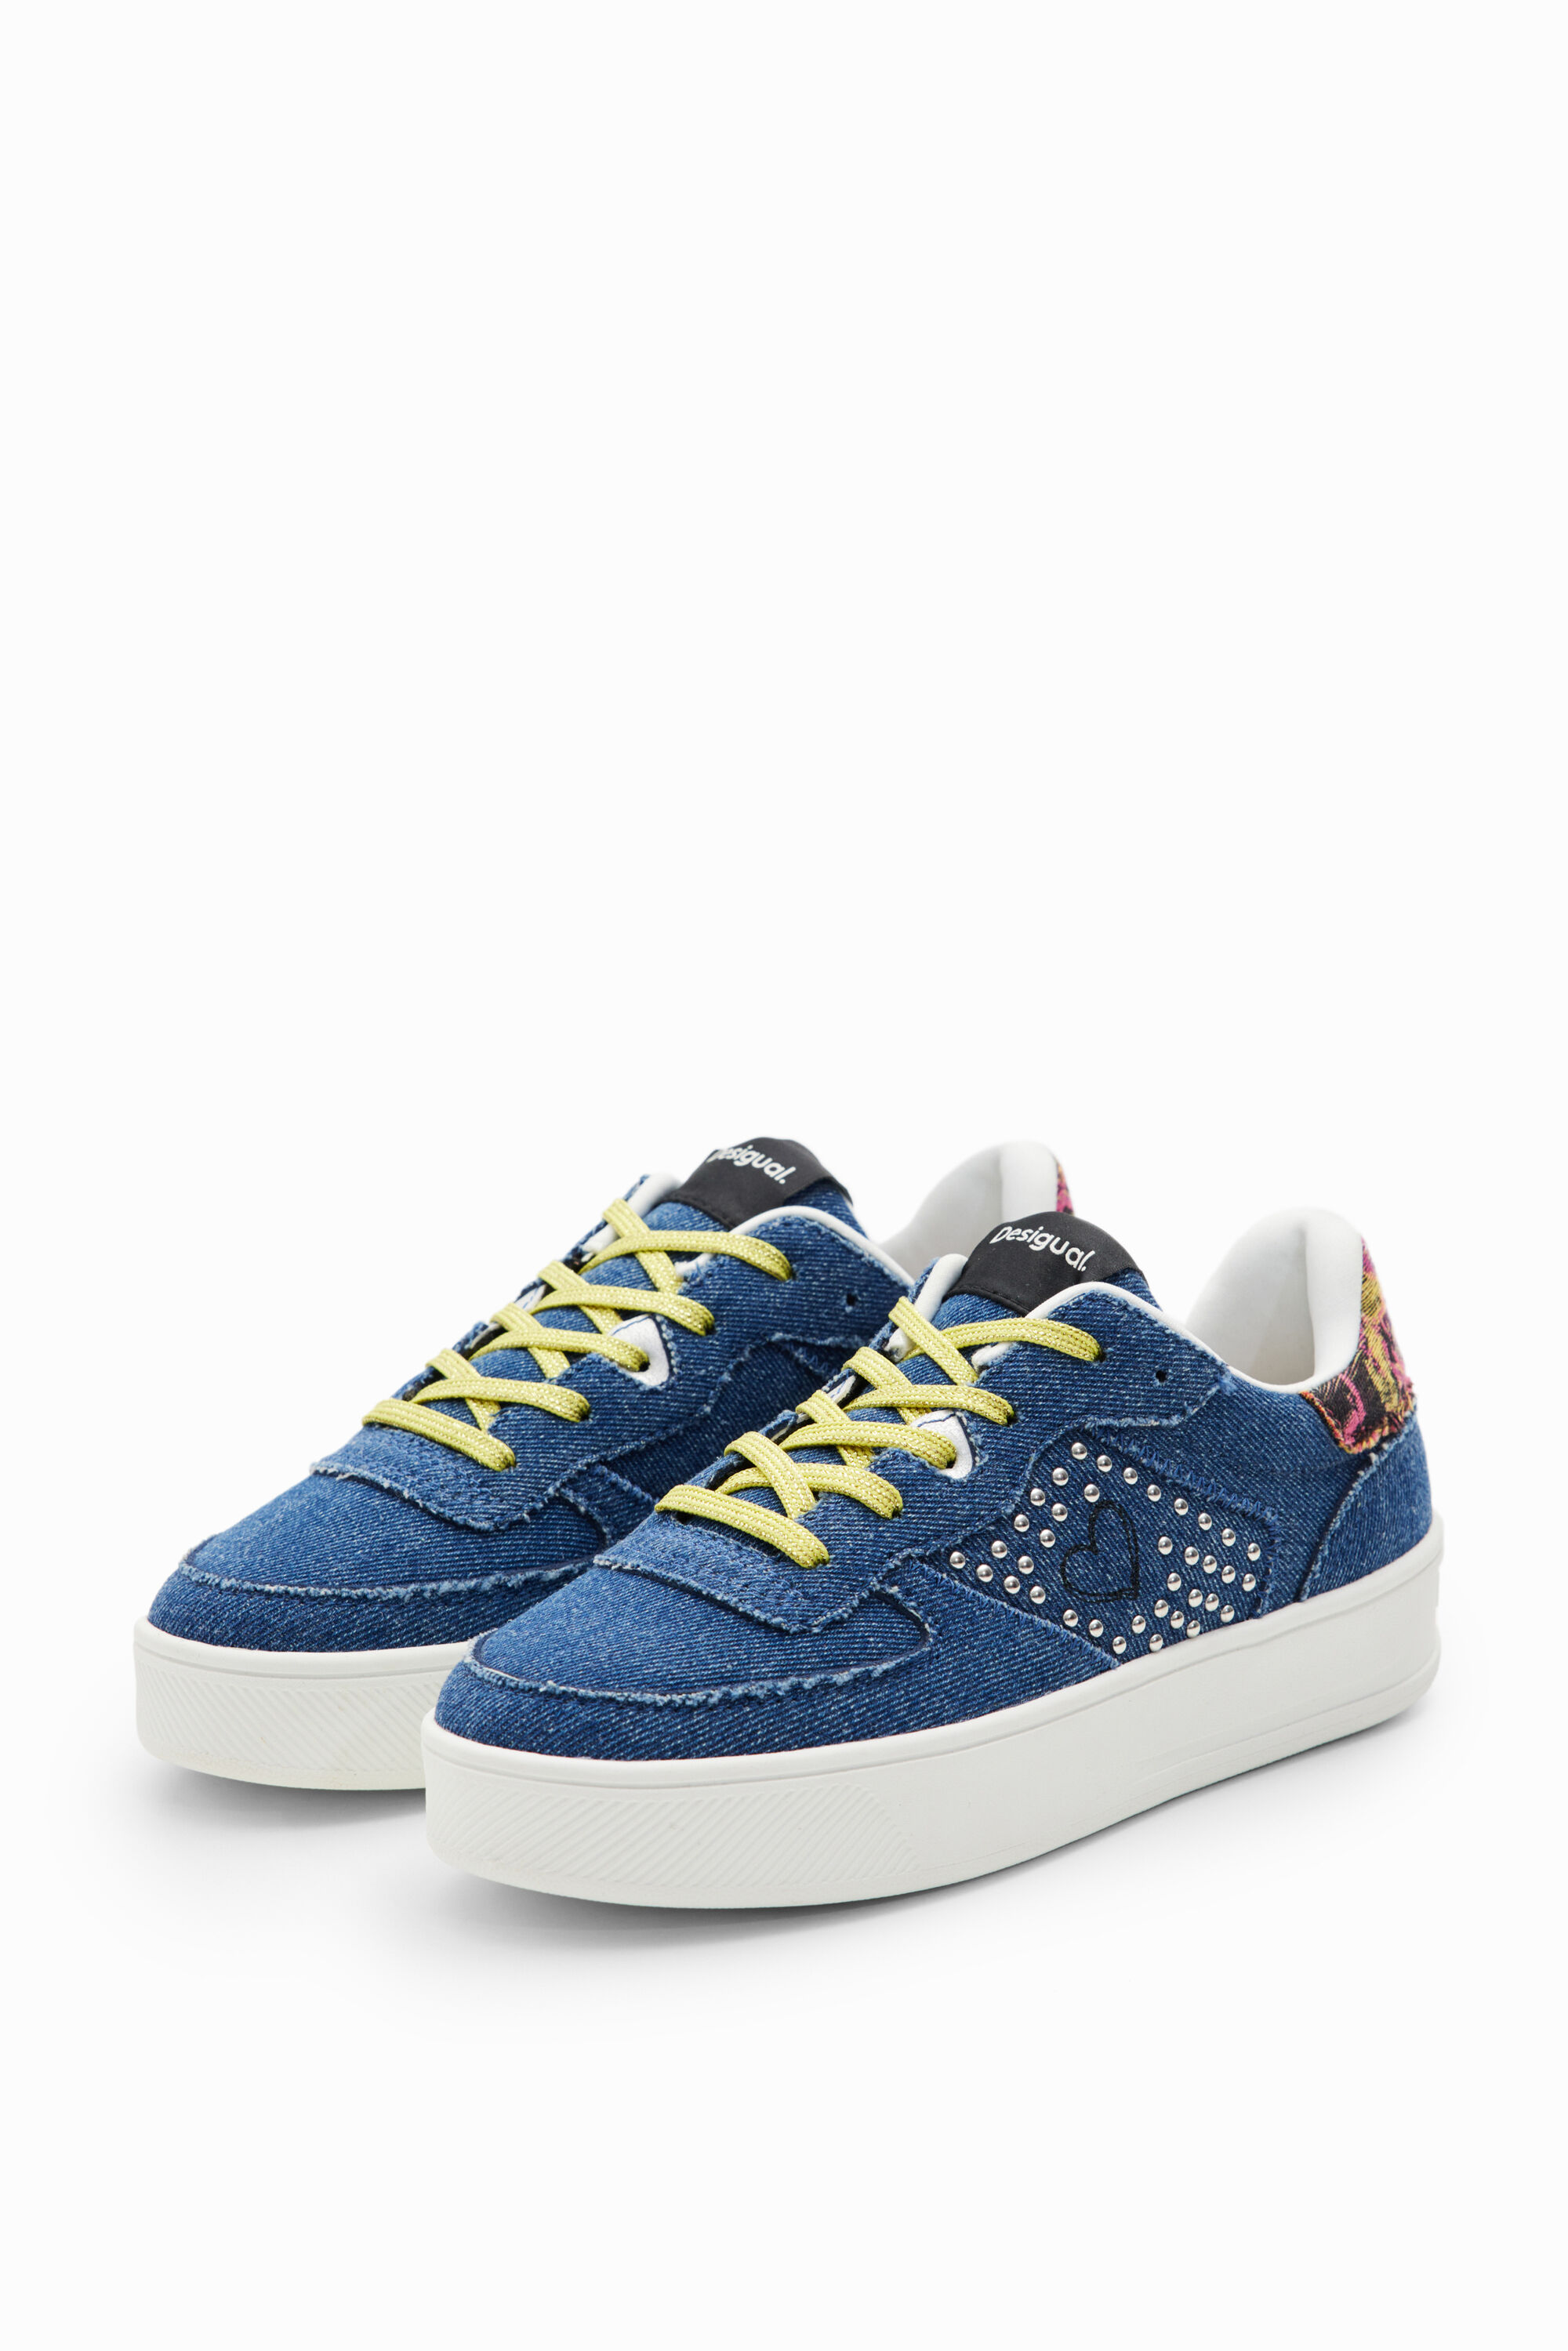 Denim heart platform sneakers - BLUE - 38